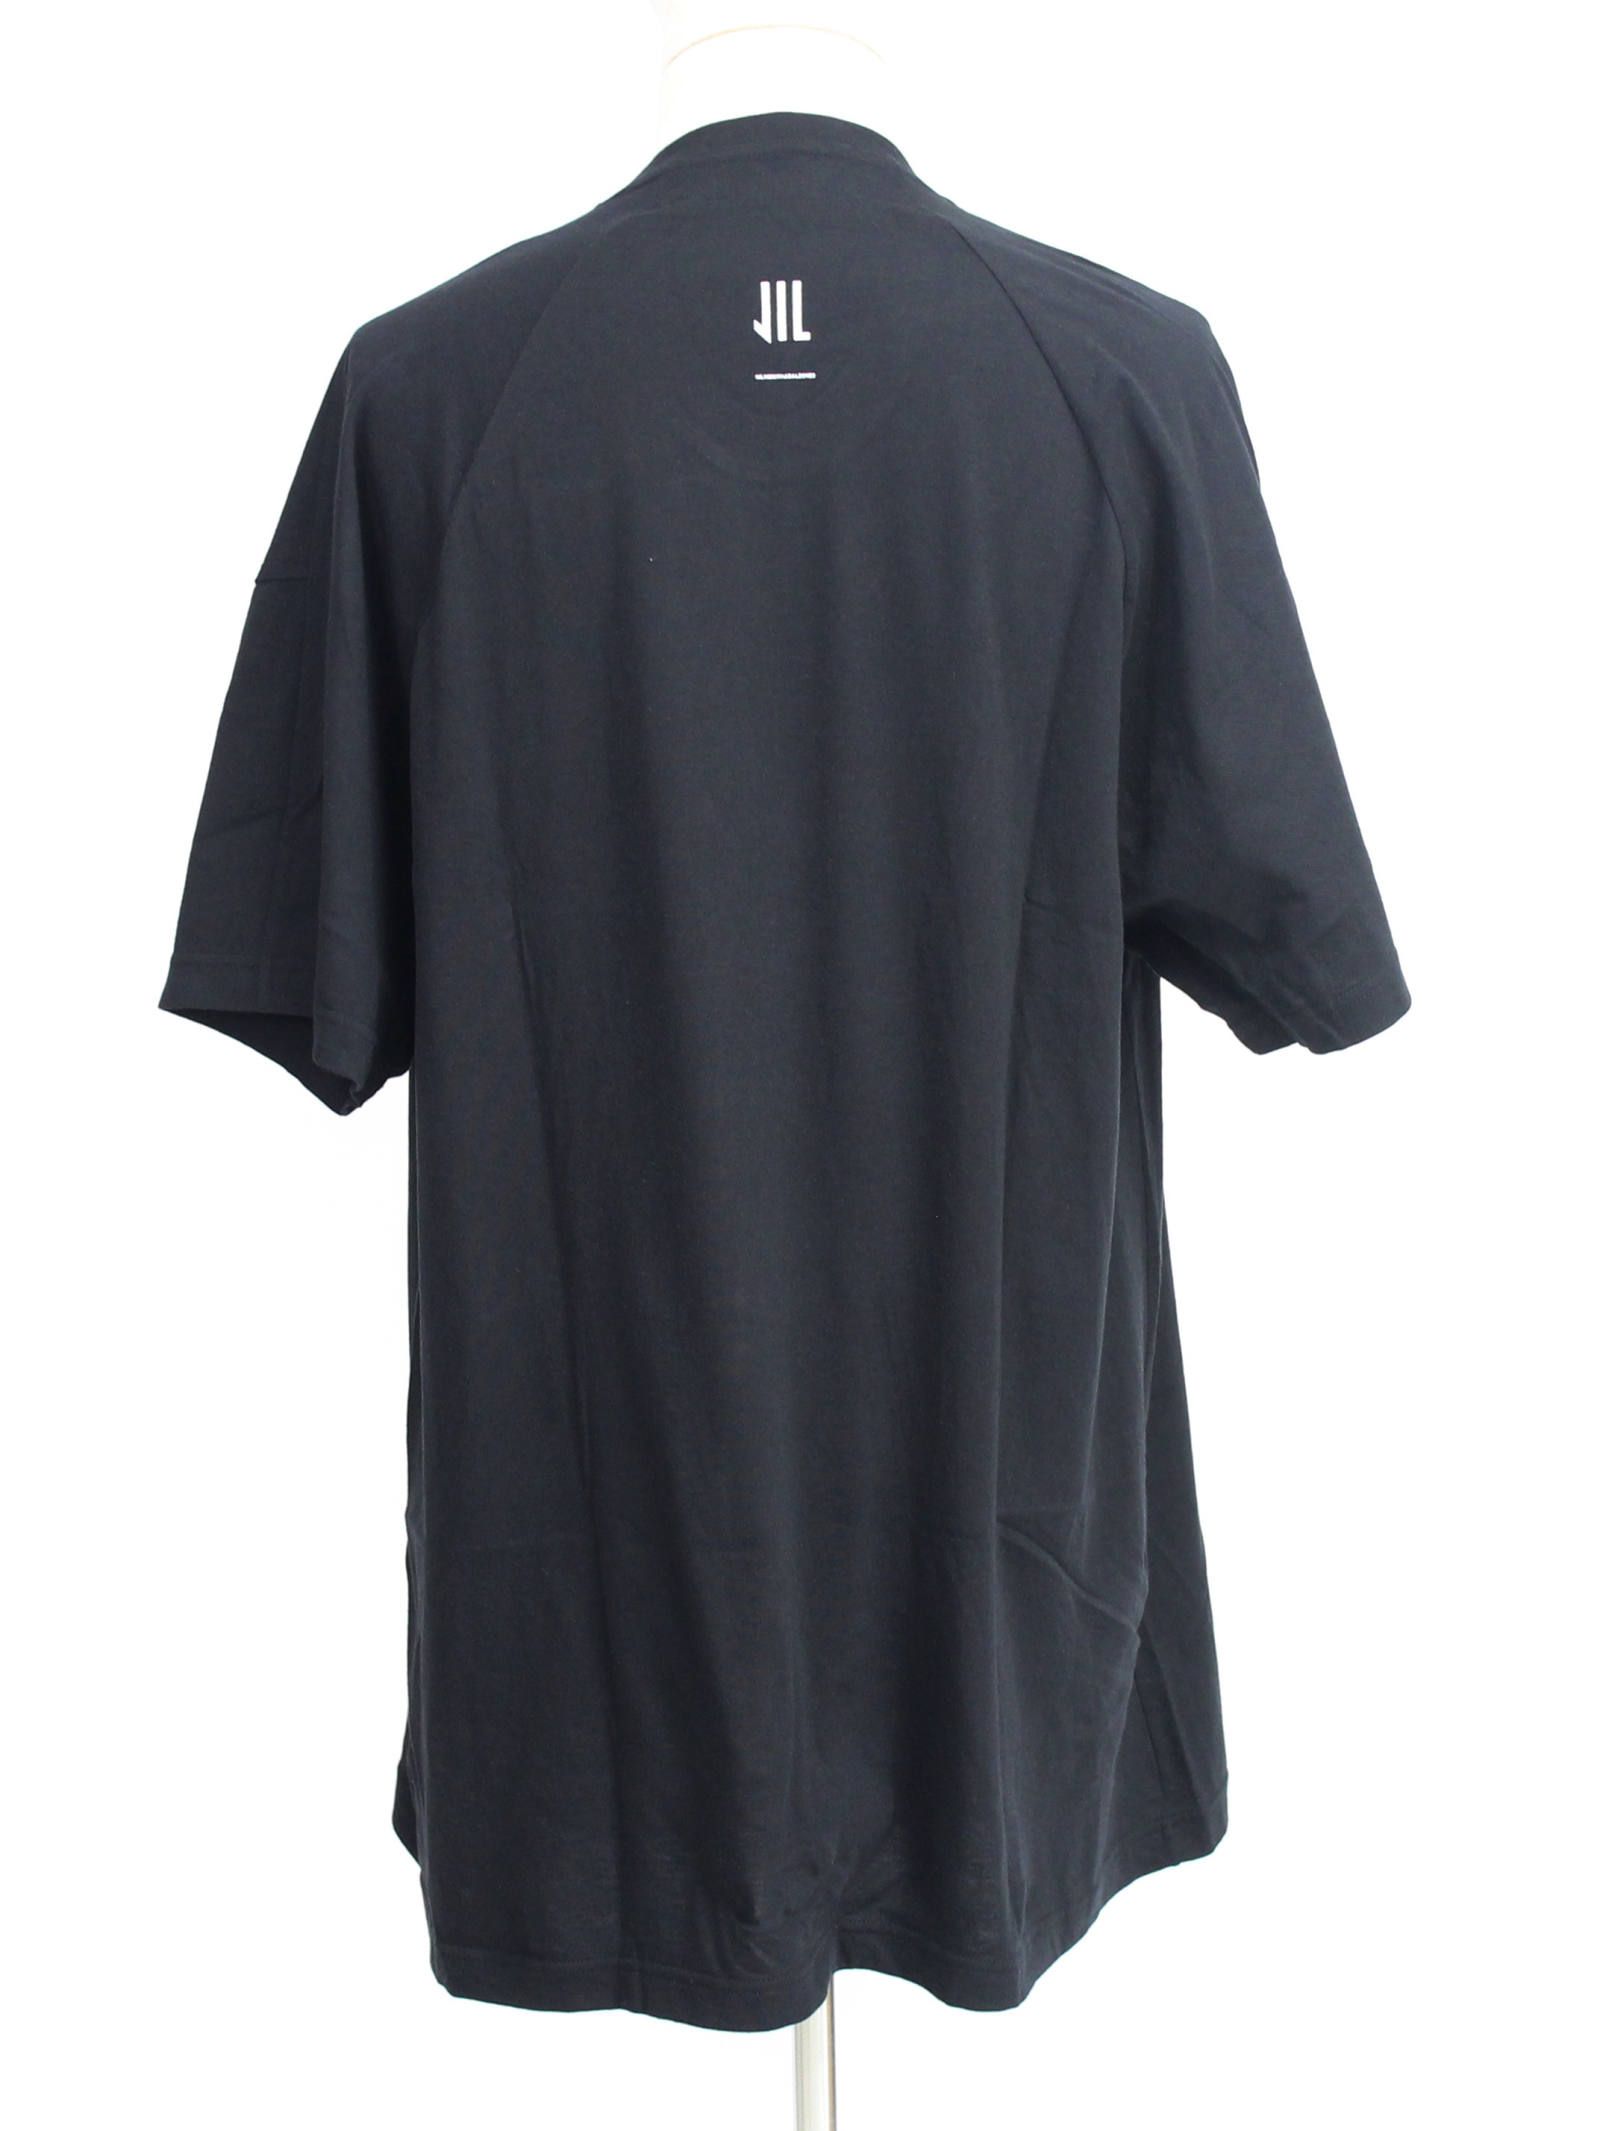 NILoS - 【IKE着用モデル】Tシャツ EXIST ver.2 641CPM6 - BLACK 